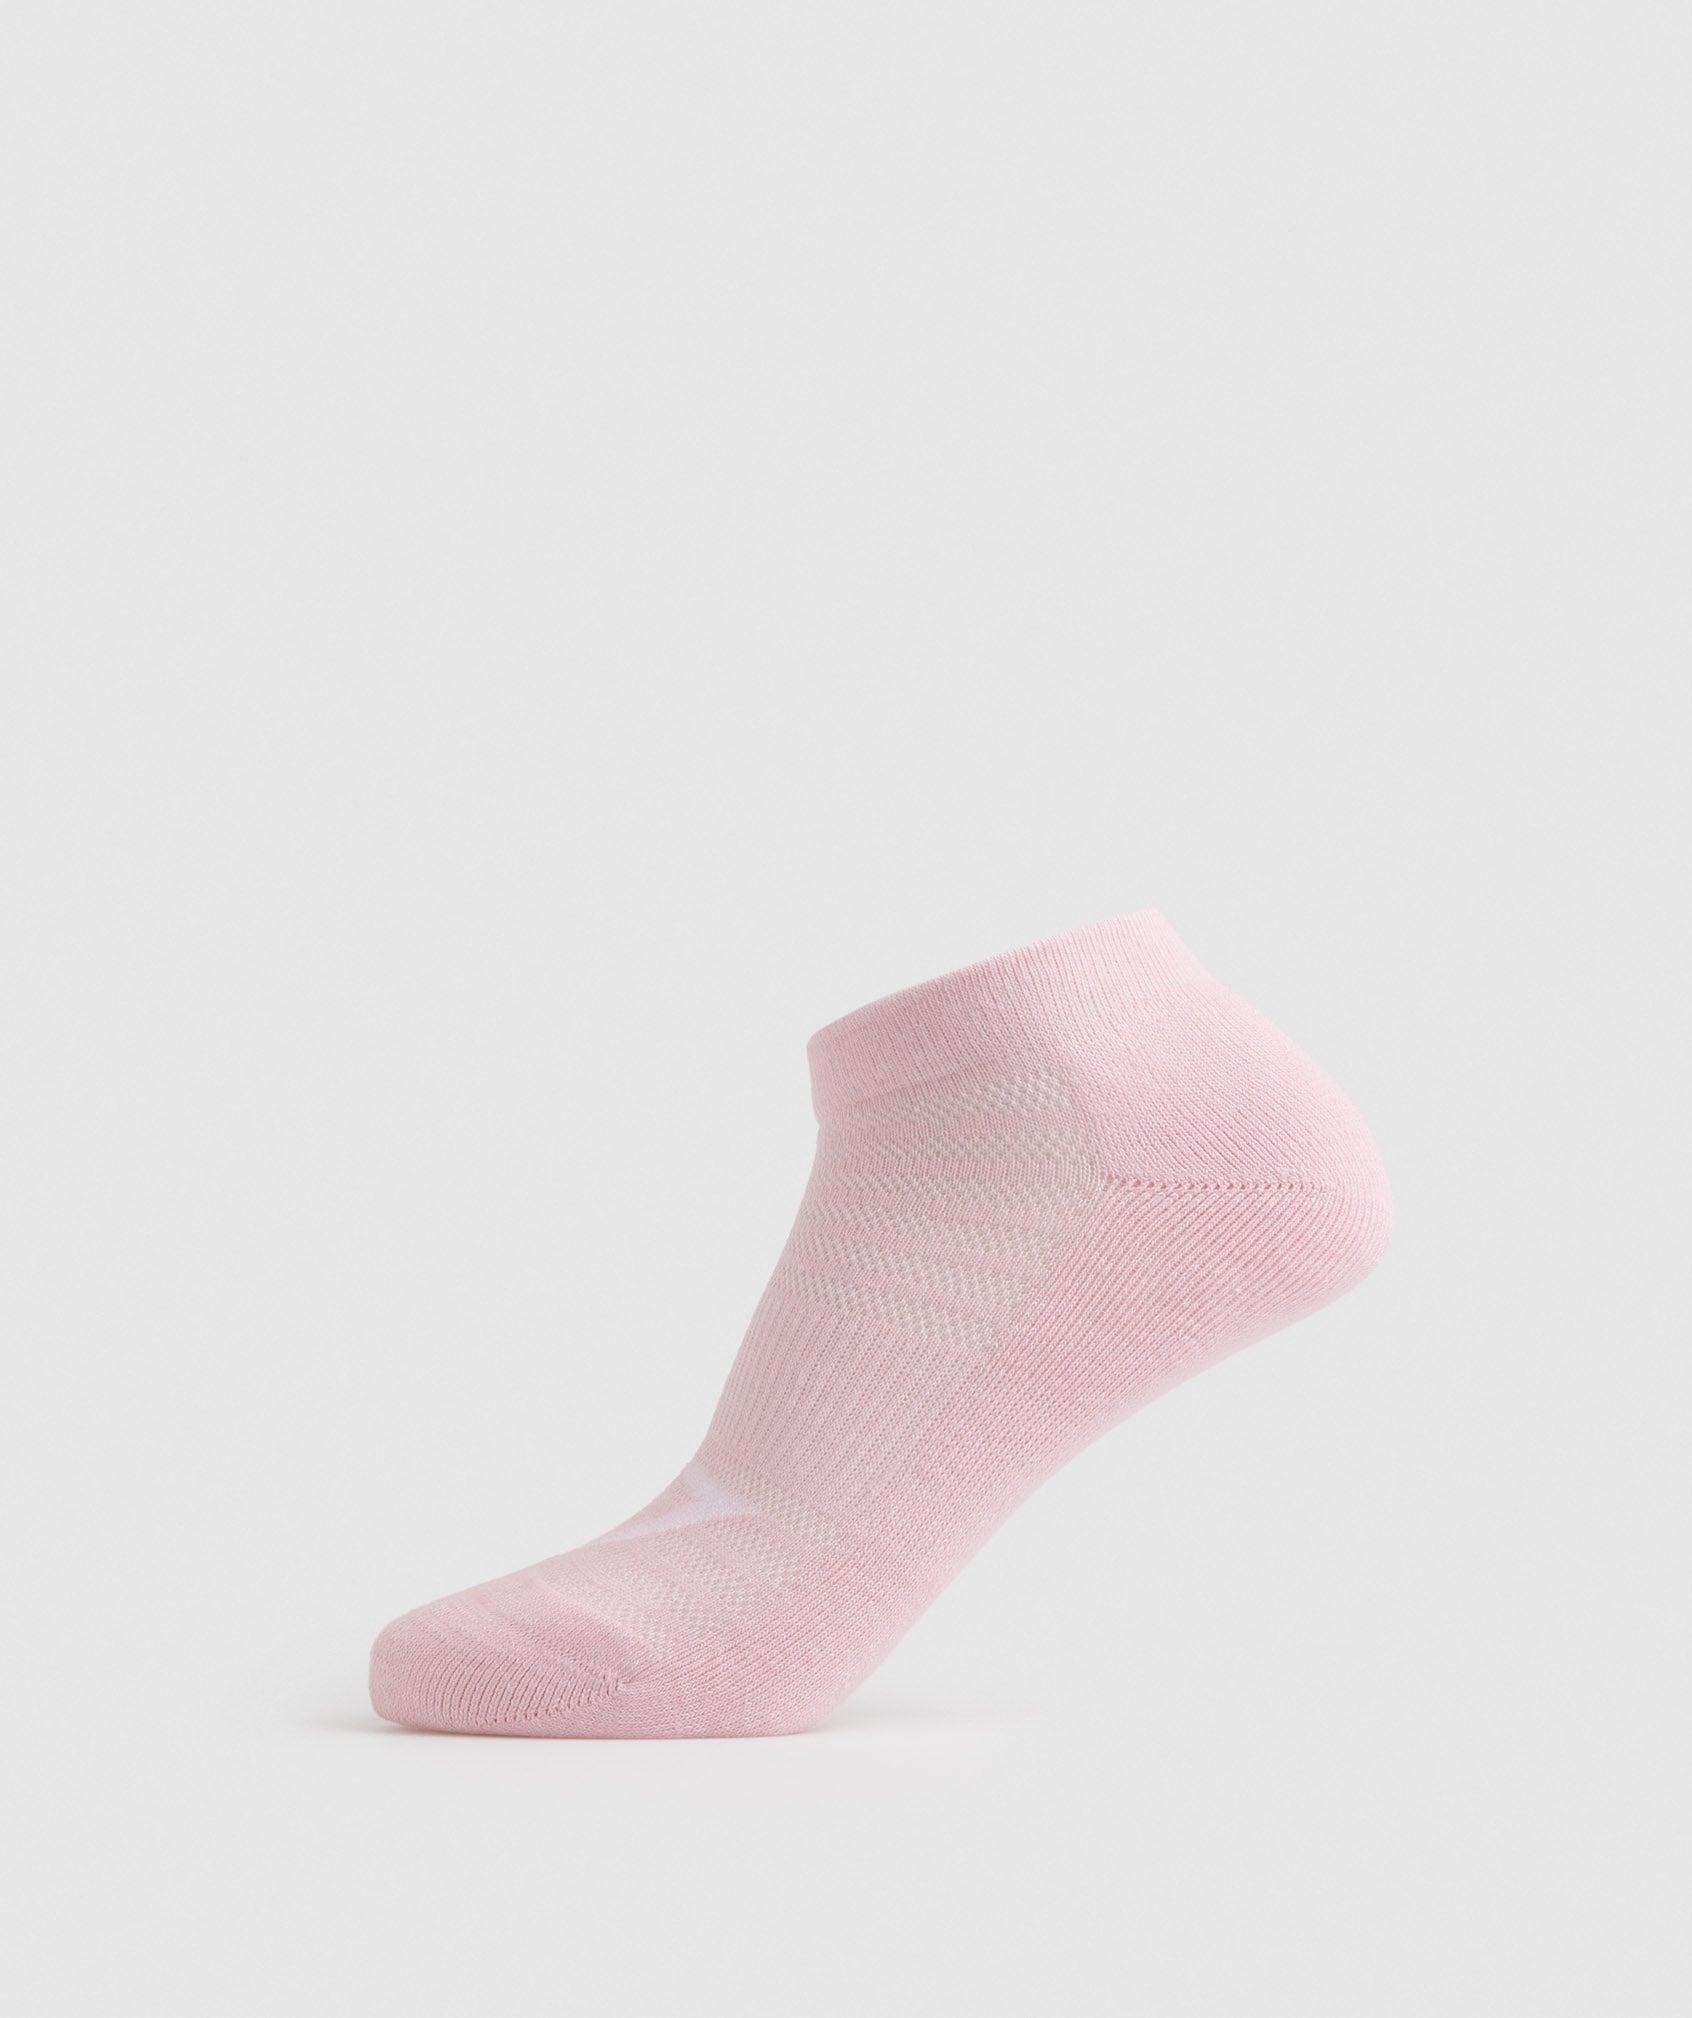 Trainer Socks 3pk in Baked Maroon/Sweet Pink/White - view 6